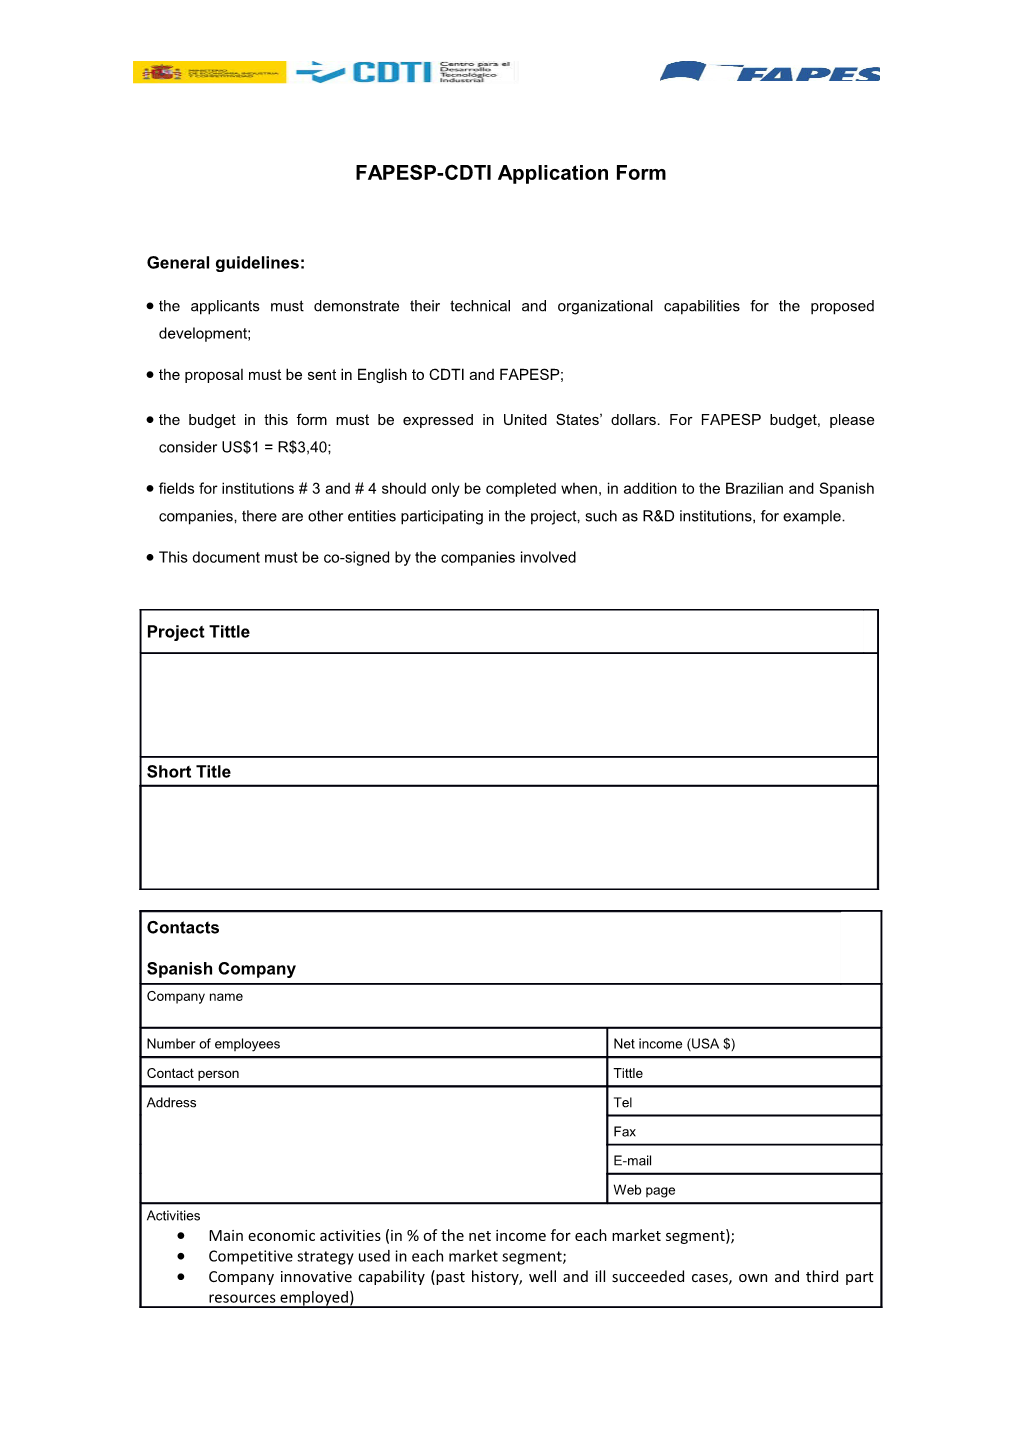 FAPESP-CDTI Application Form